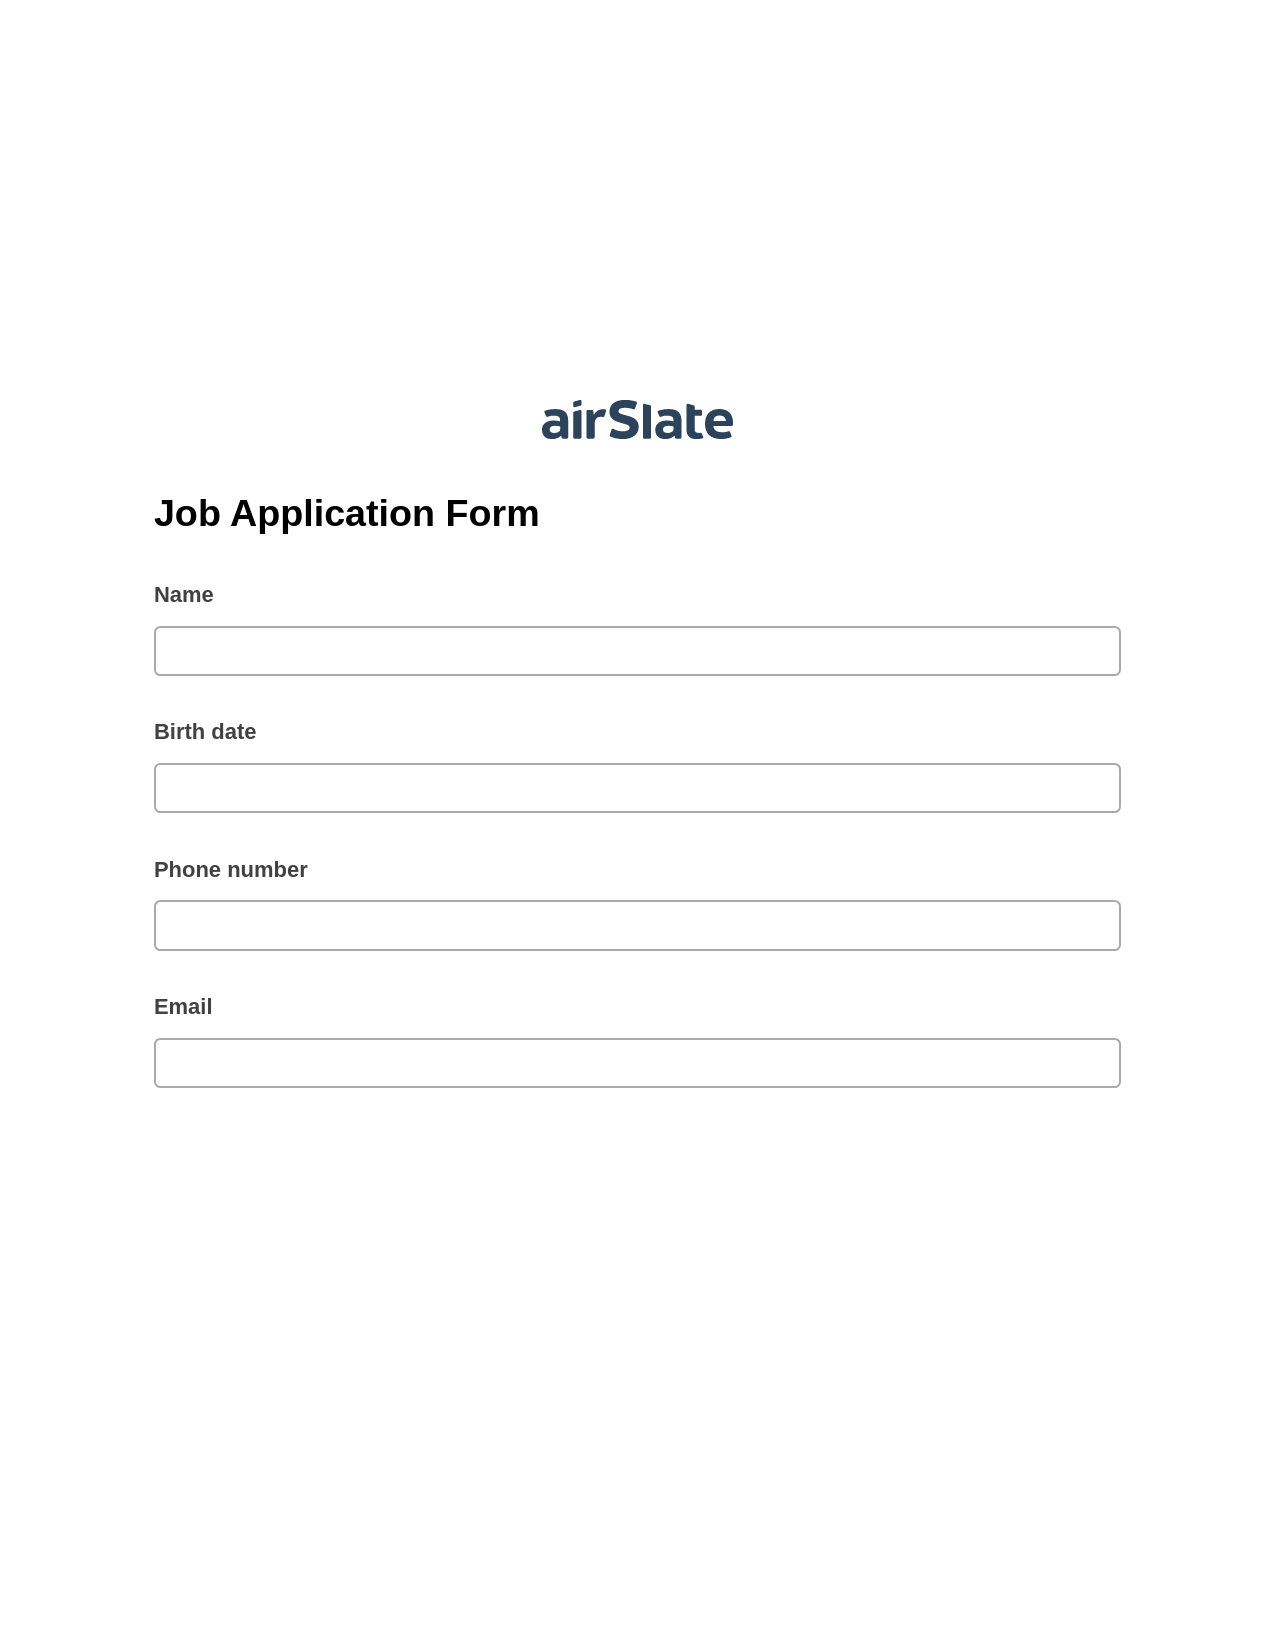 Job Application Form Pre-fill from Google Sheet Dropdown Options Bot, Webhook Bot, Export to Google Sheet Bot